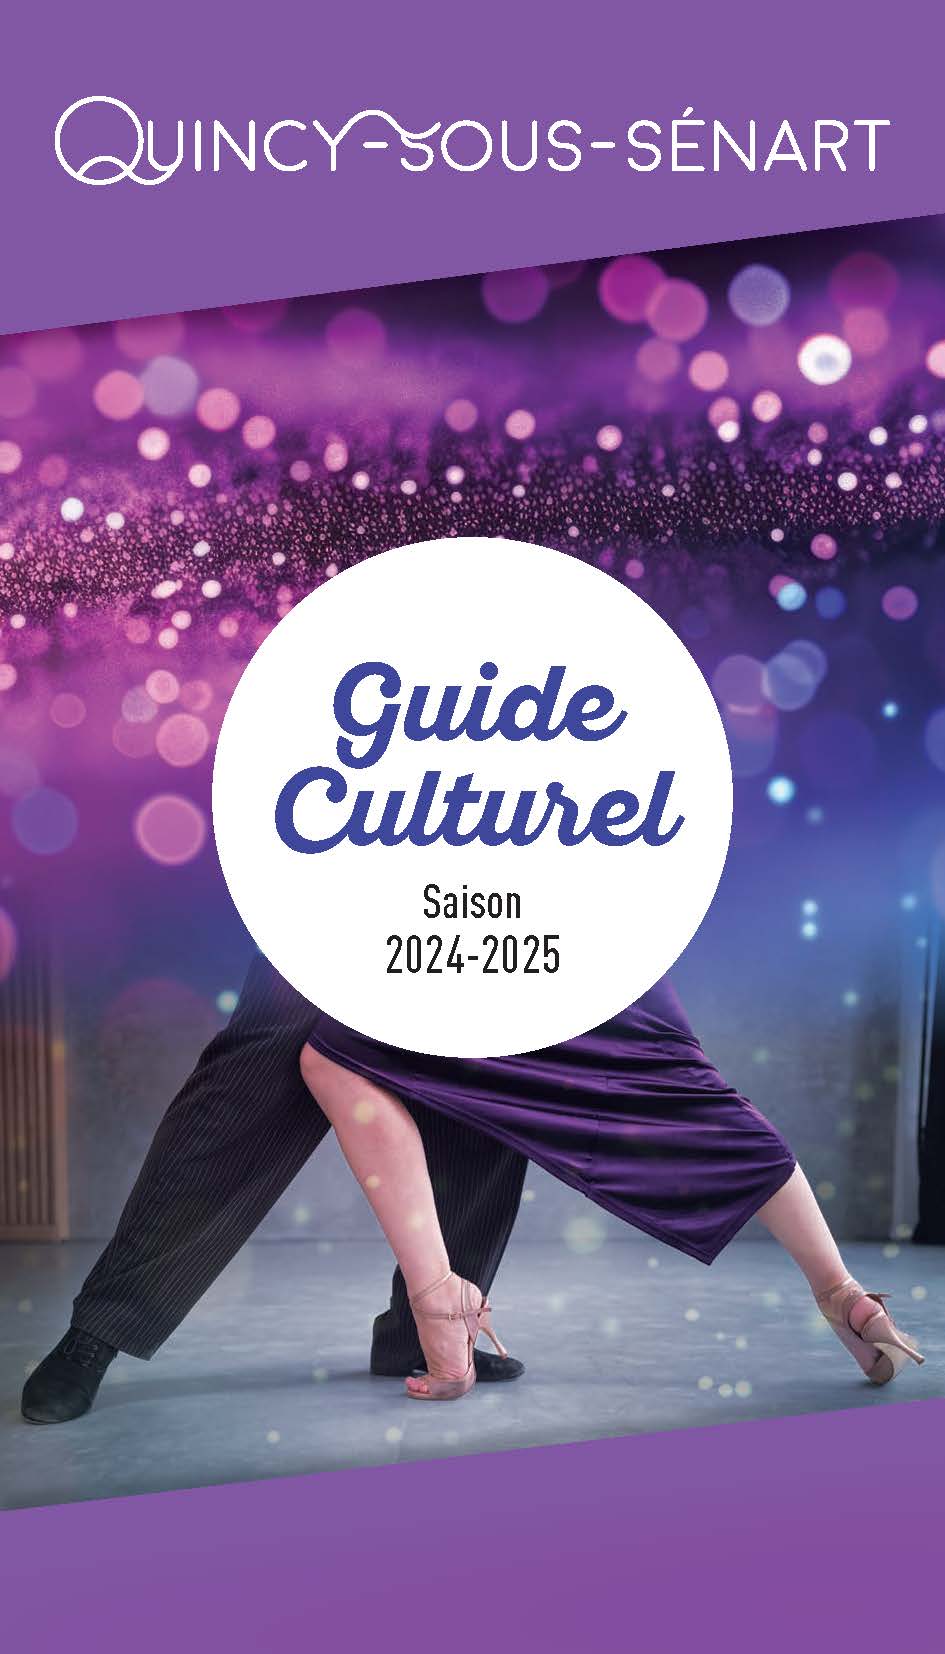 Quincy guide culturel 2024-2025_Page_01.jpg